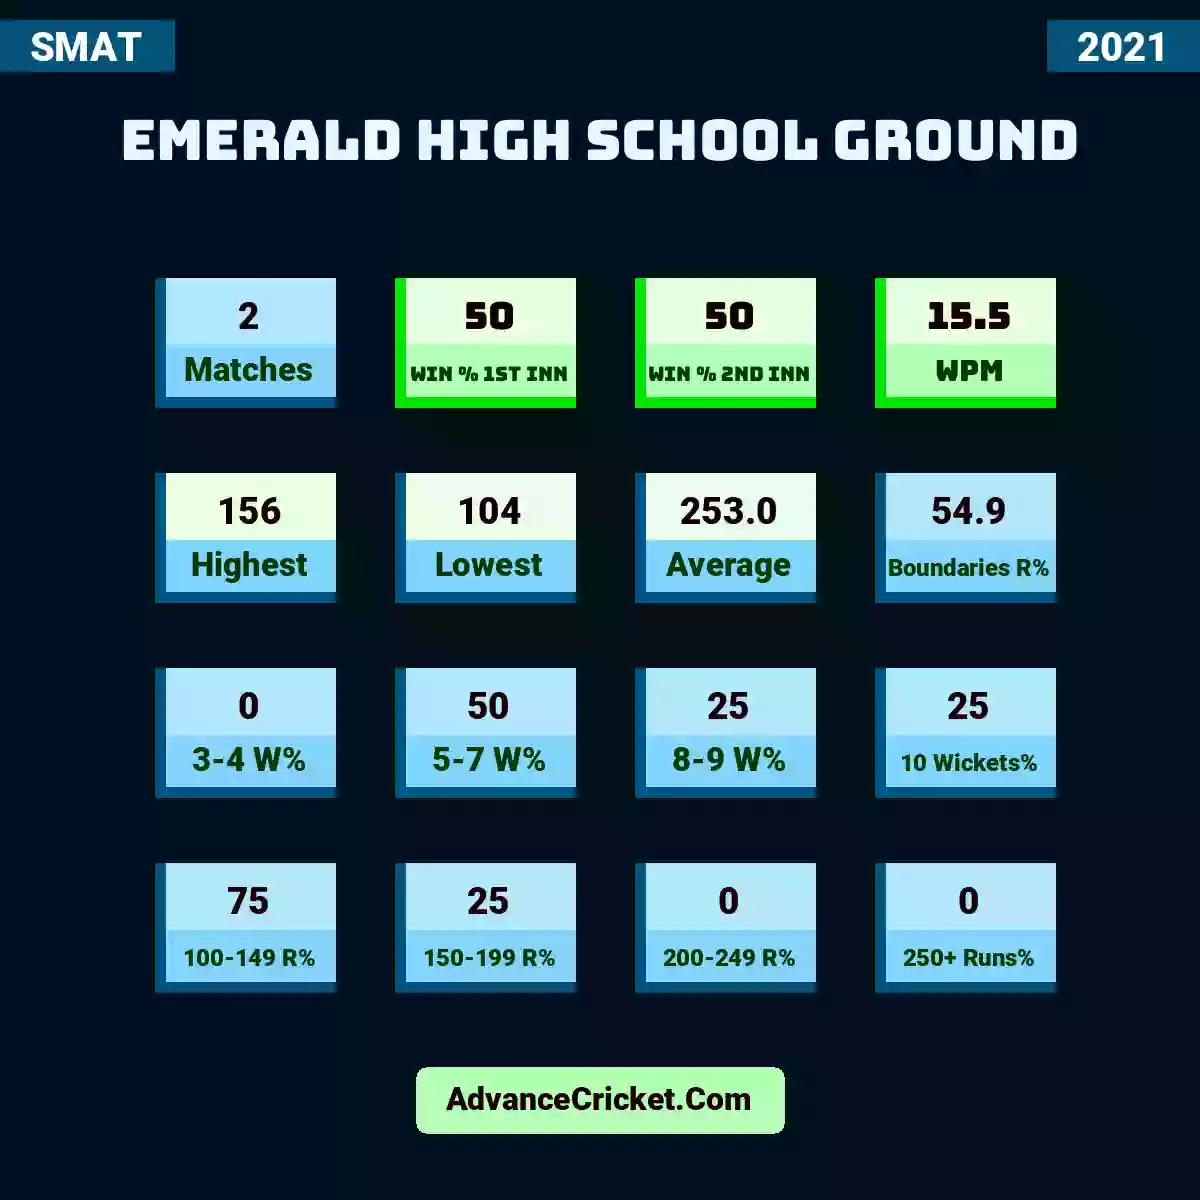 Image showing Emerald High School Ground with Matches: 2, Win % 1st Inn: 50, Win % 2nd Inn: 50, WPM: 15.5, Highest: 156, Lowest: 104, Average: 253.0, Boundaries R%: 54.9, 3-4 W%: 0, 5-7 W%: 50, 8-9 W%: 25, 10 Wickets%: 25, 100-149 R%: 75, 150-199 R%: 25, 200-249 R%: 0, 250+ Runs%: 0.